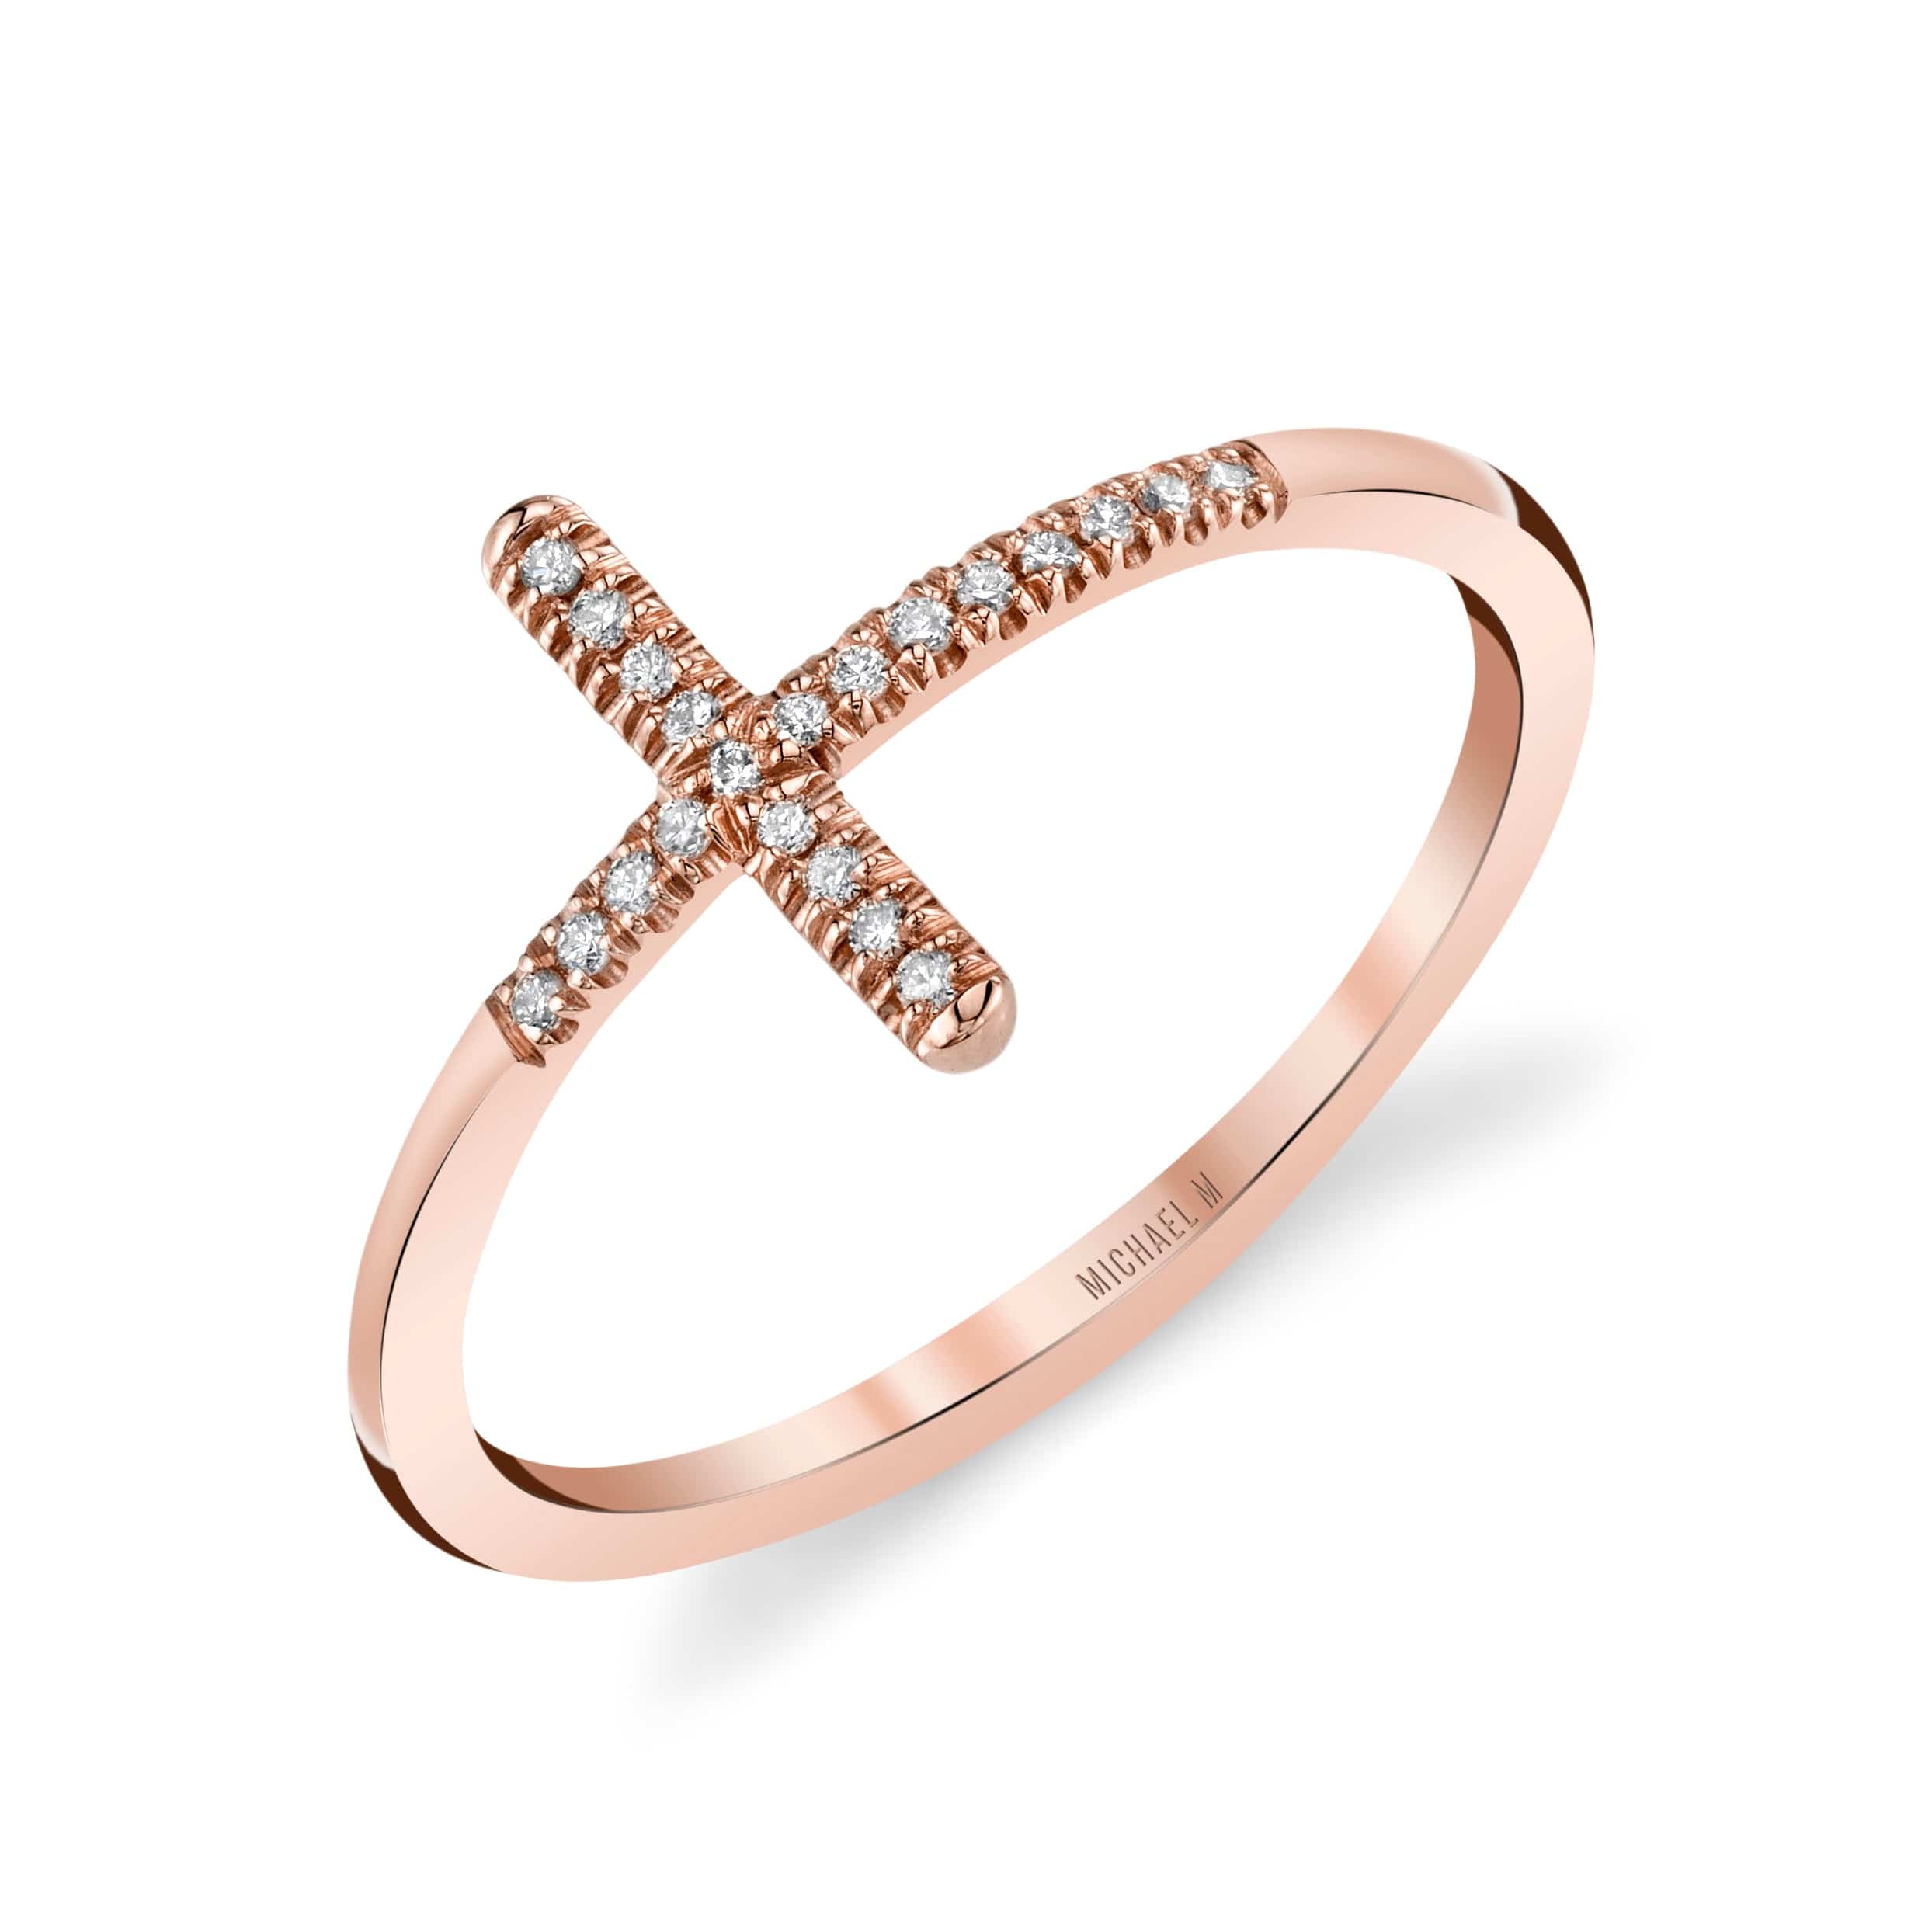 MICHAEL M Fashion Rings 14K Rose Gold / 6.5 Diamond Cross Ring F330-RG6.5